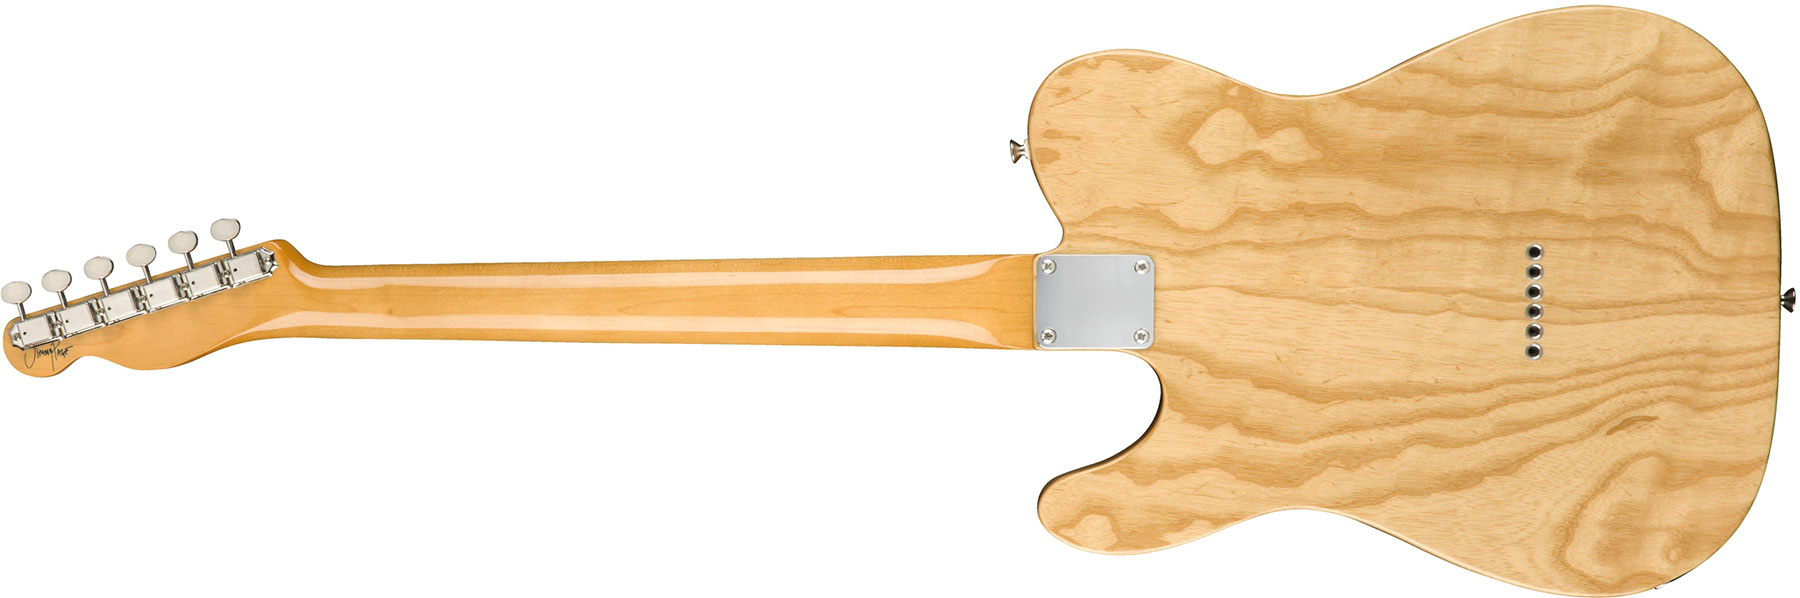 Fender Jimmy Page Tele Dragon Ltd Mex Signature Rw - Natural - Guitarra eléctrica con forma de tel - Variation 1